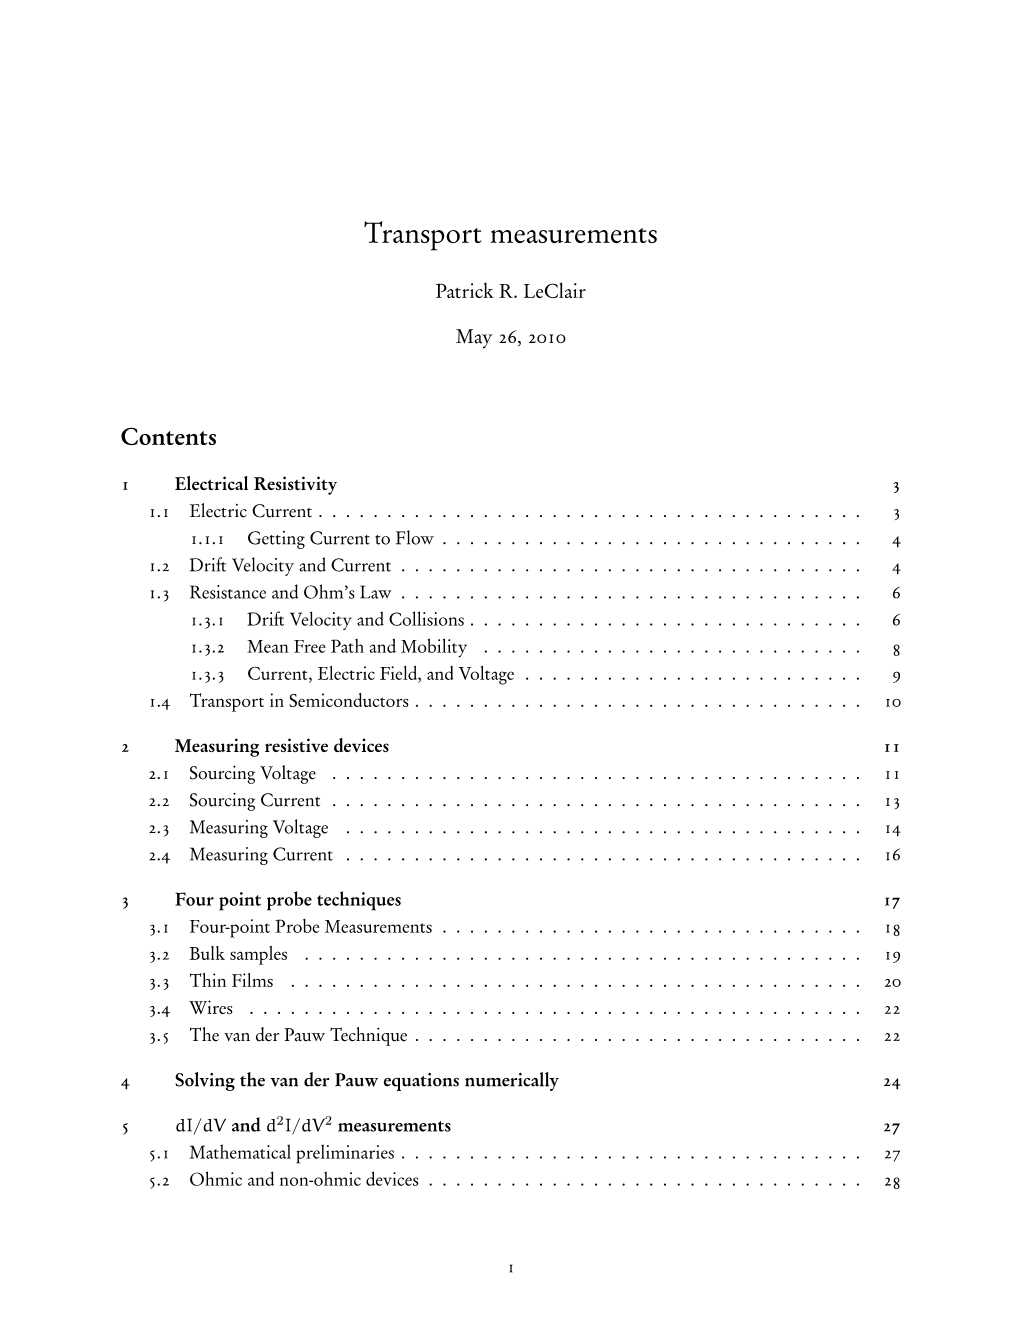 Transport Measurements